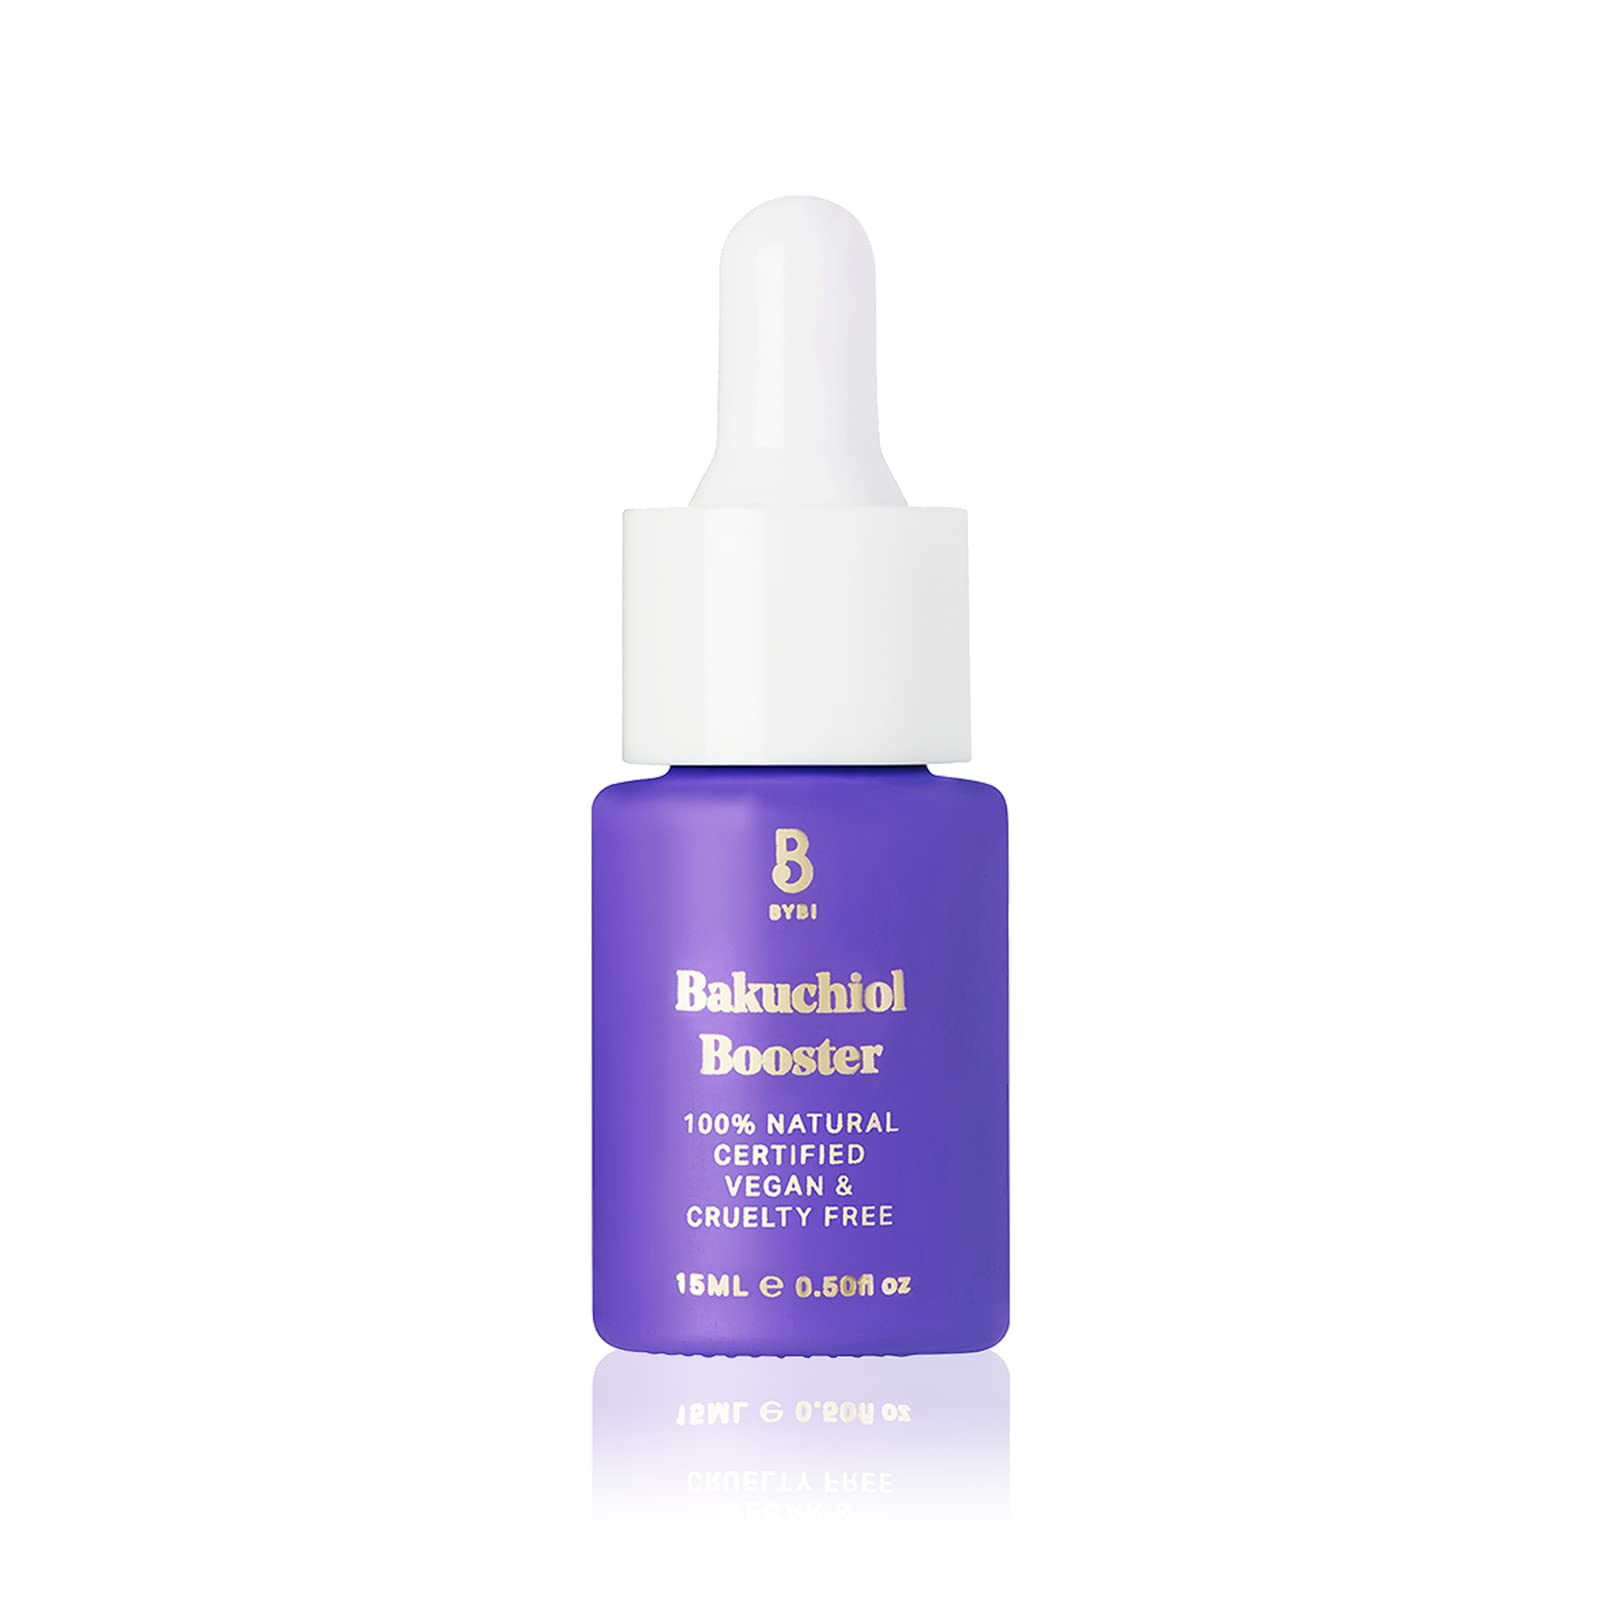 BYBI Beauty Bakuchiol Booster | Facial Oil | Reduce Wrinkles & Fine Lines, Rejuvenate Your Skin | Contains 1% Bakuchiol & Olive Squalane | 15ml